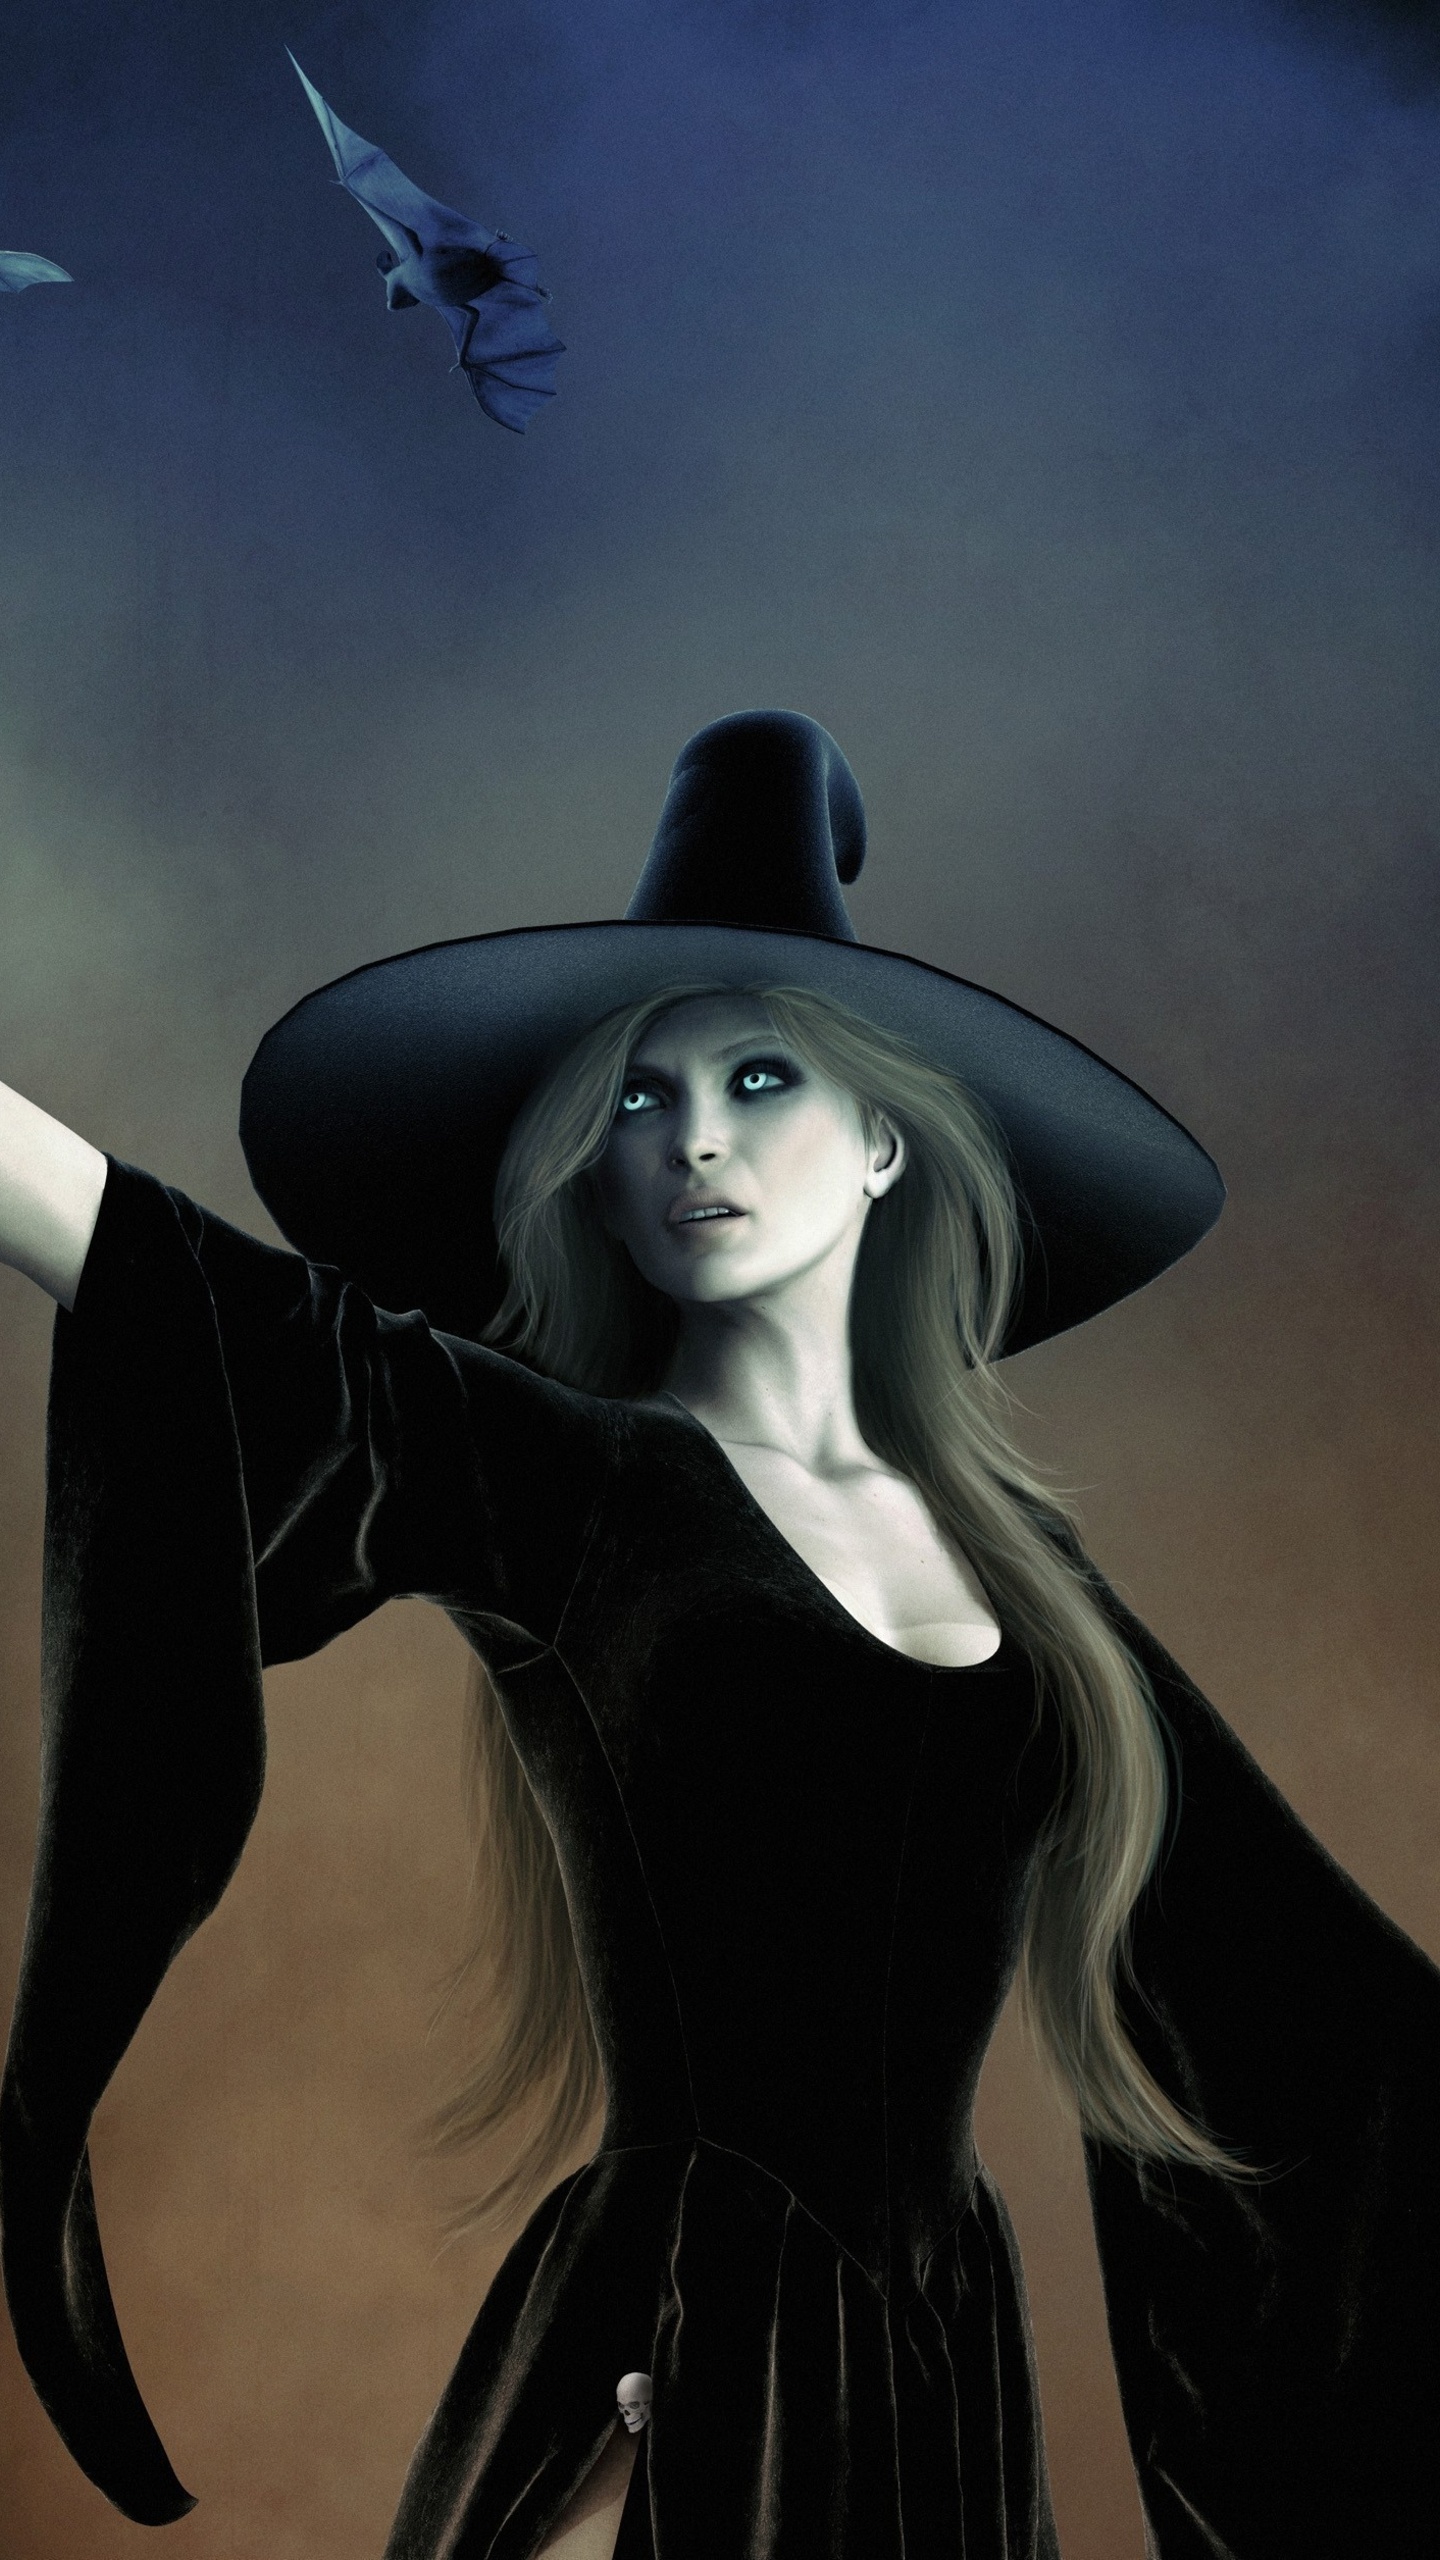 1440x2560 Witch With Hat Black Dress Fantasy Art Samsung Galaxy S6,S7 ...